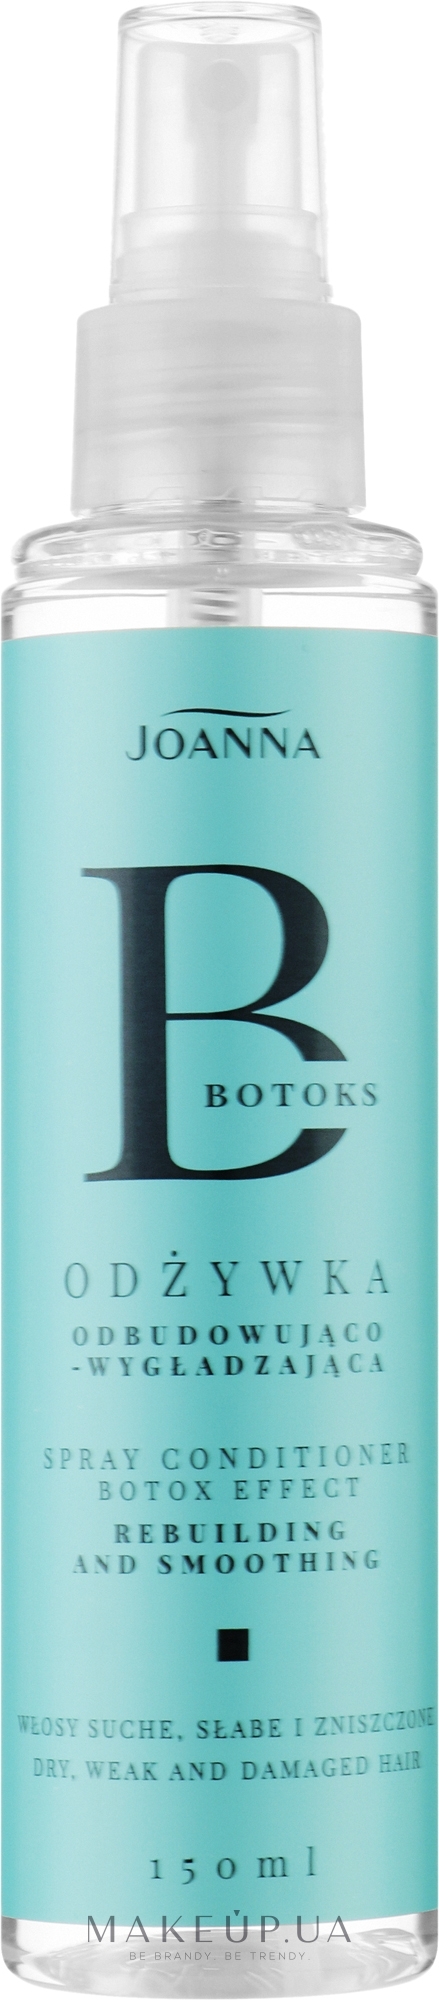 Восстанавливающий и разглаживающий спрей-кондиционер для волос, с ботоксом - Joanna Botox Hair Spray — фото 150ml